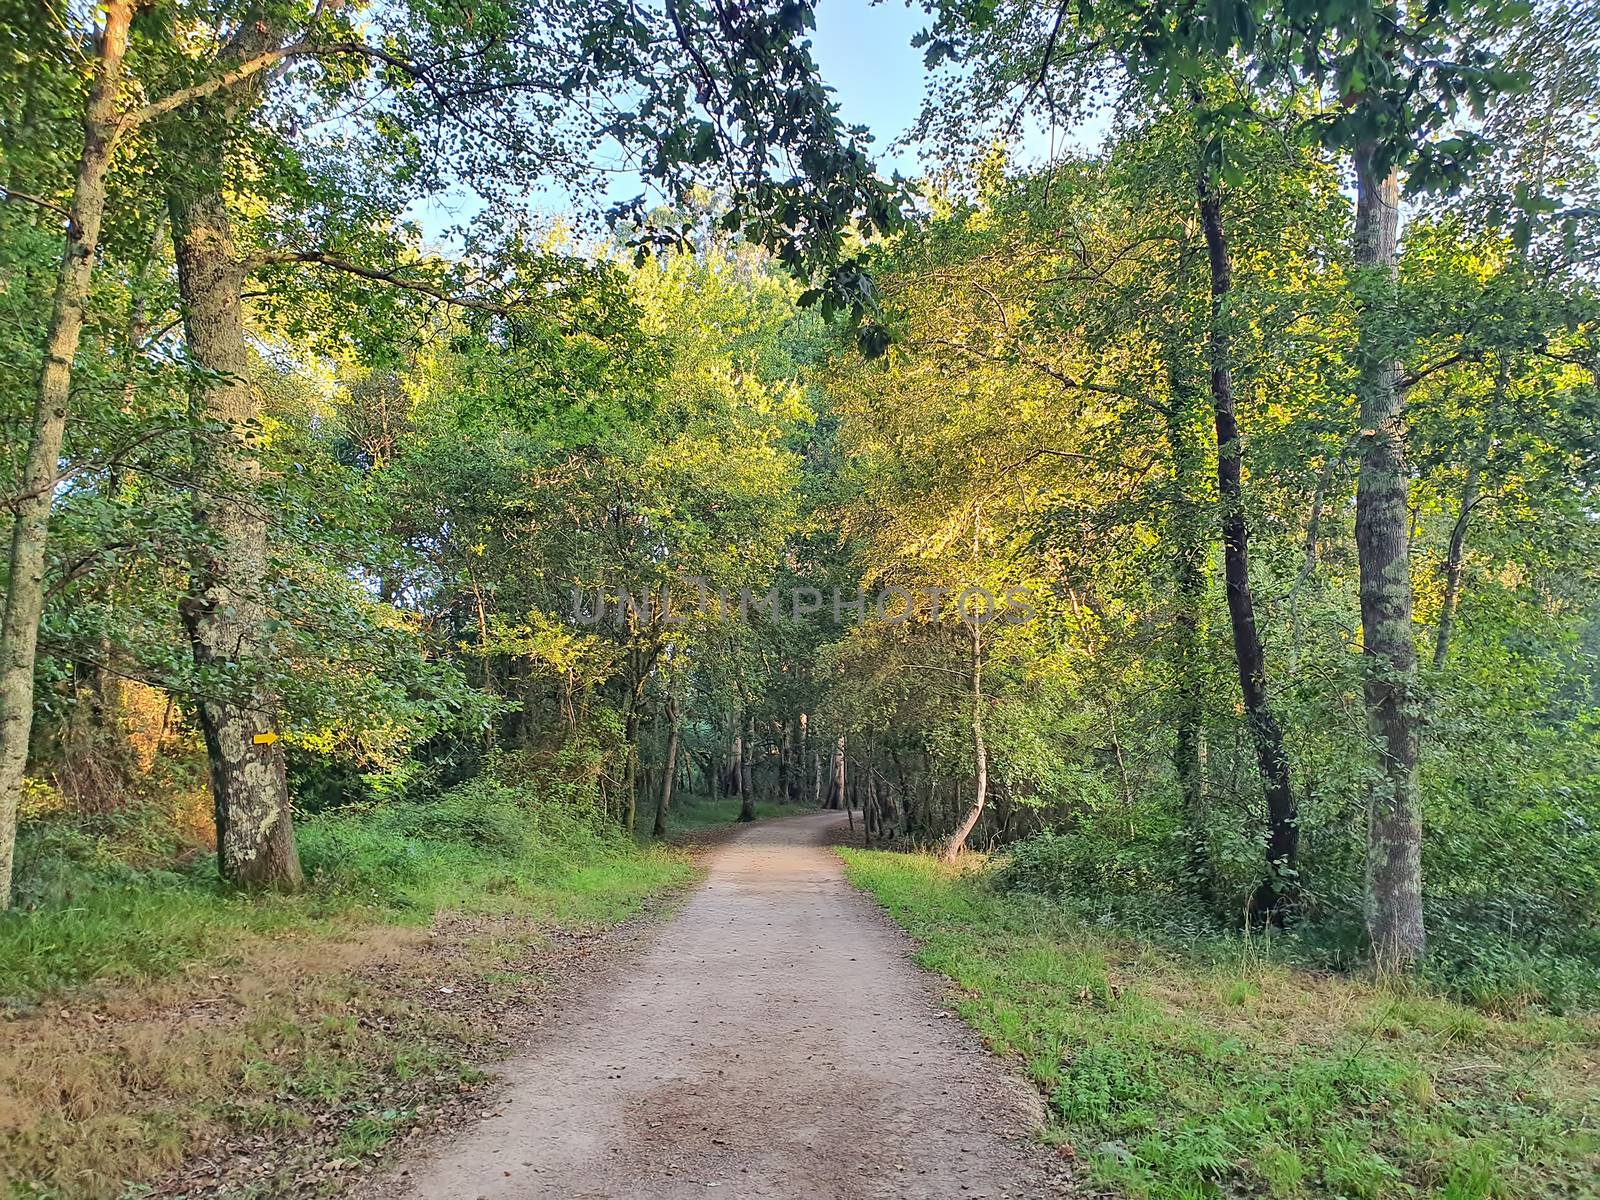 Camino Portuguese walk, earth road through forest.